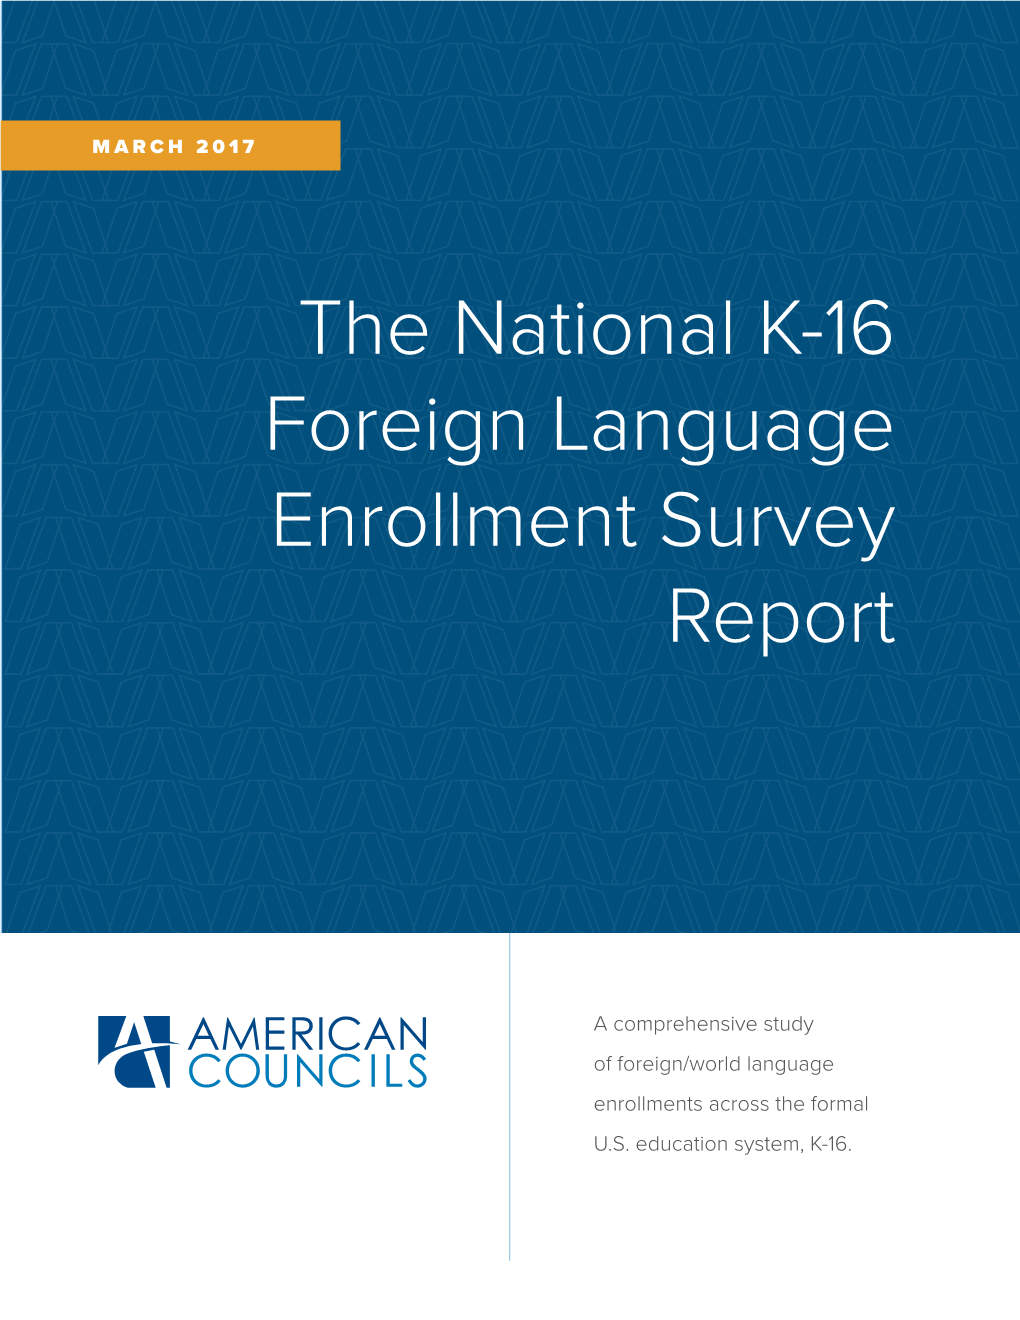 The National K-16 Foreign Language Enrollment Survey Report